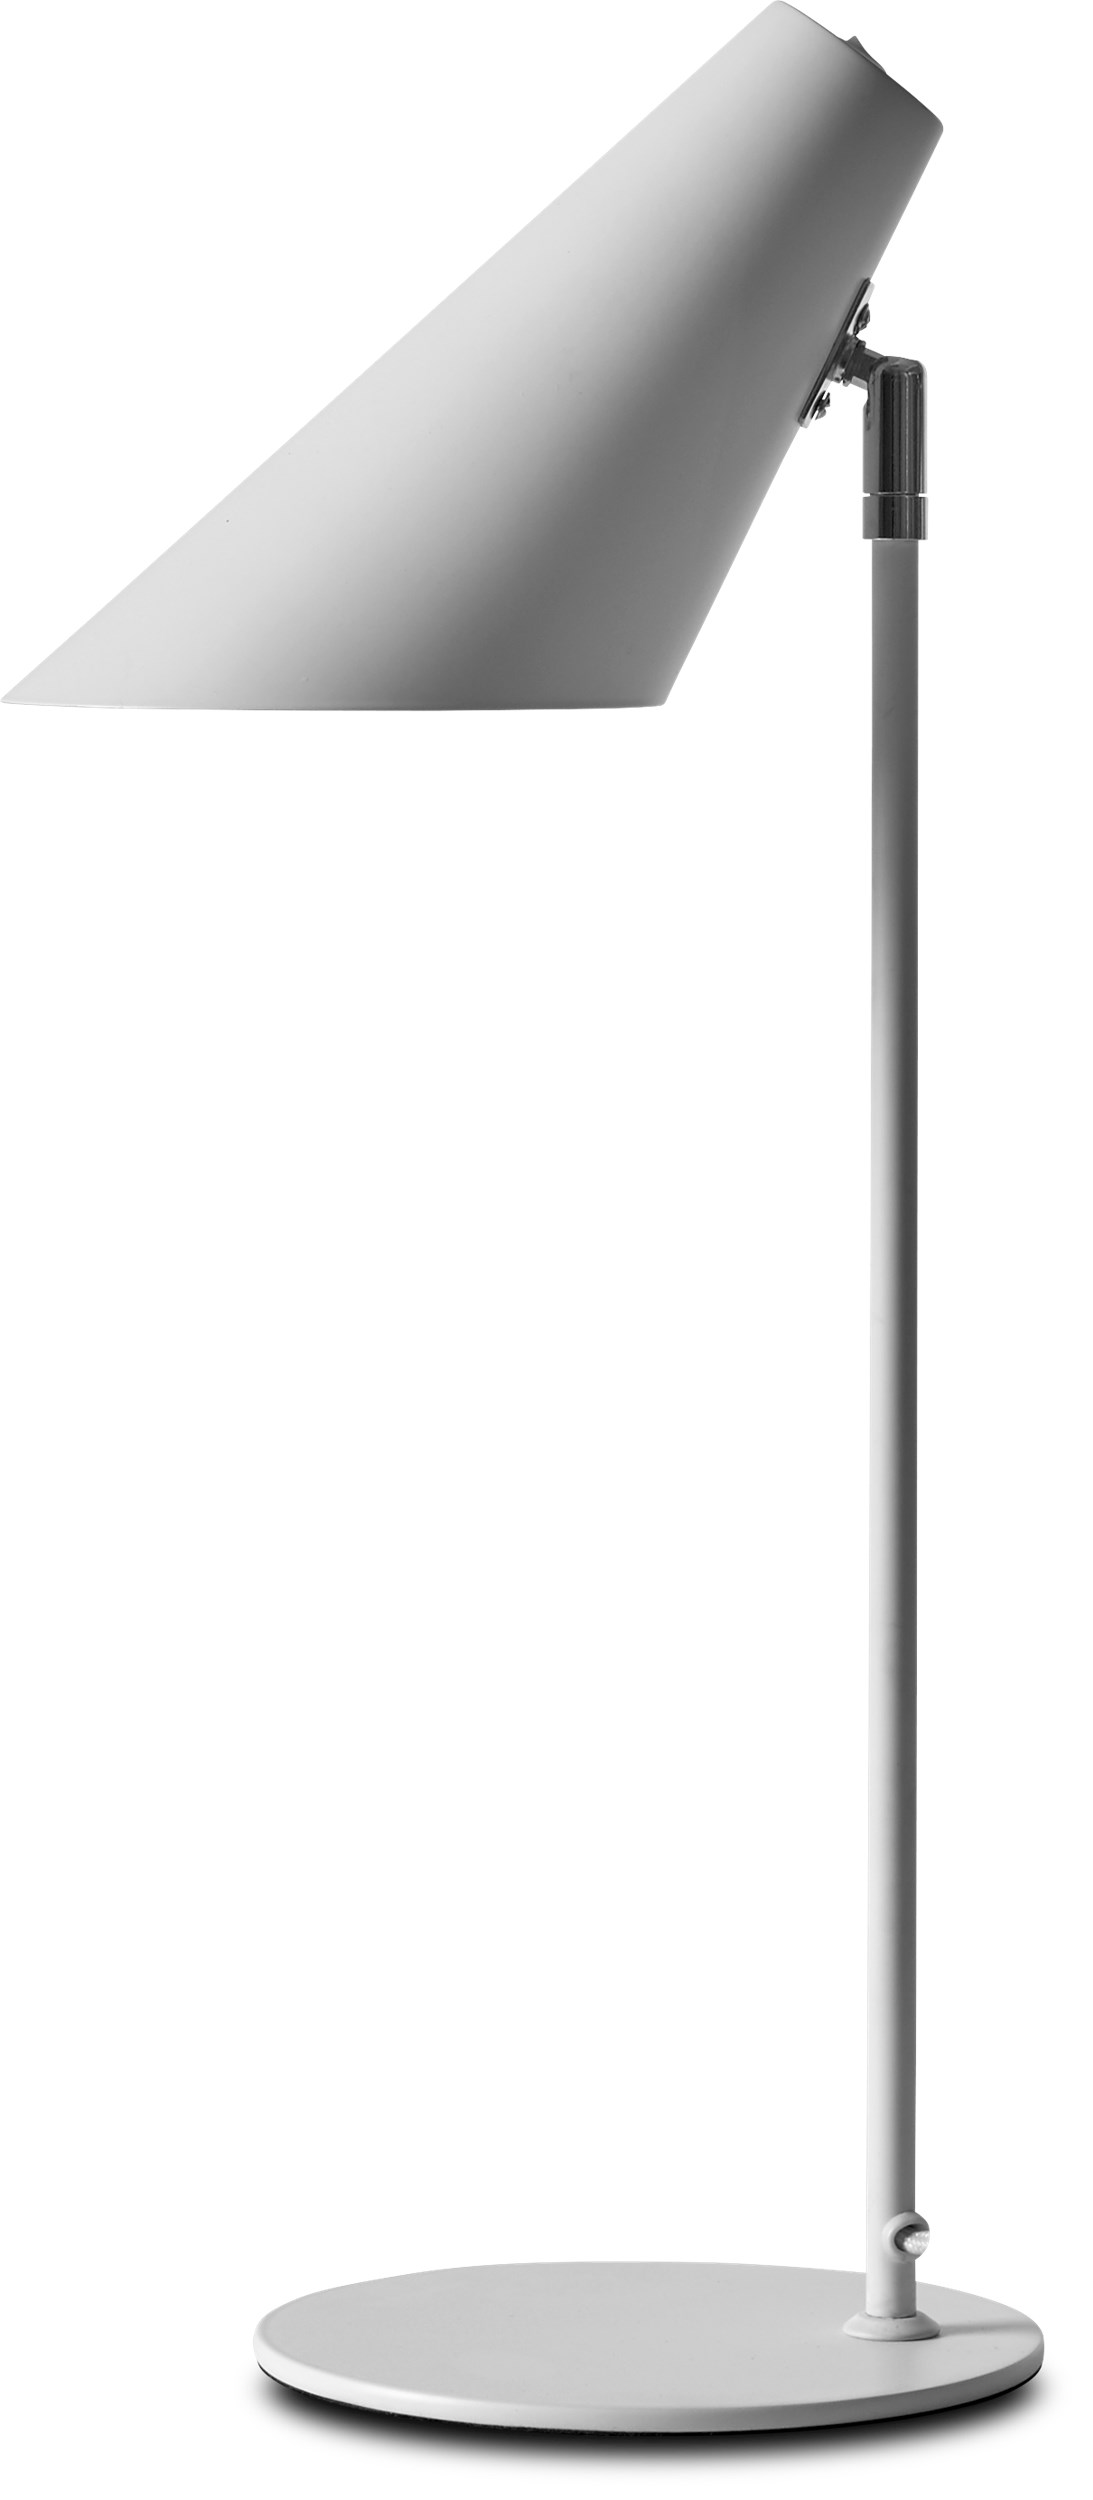 Cale Bordslampa 50 x 15,5 cm - Vit metallskärm/bas, stång i vitt/krom och vit textilsladd